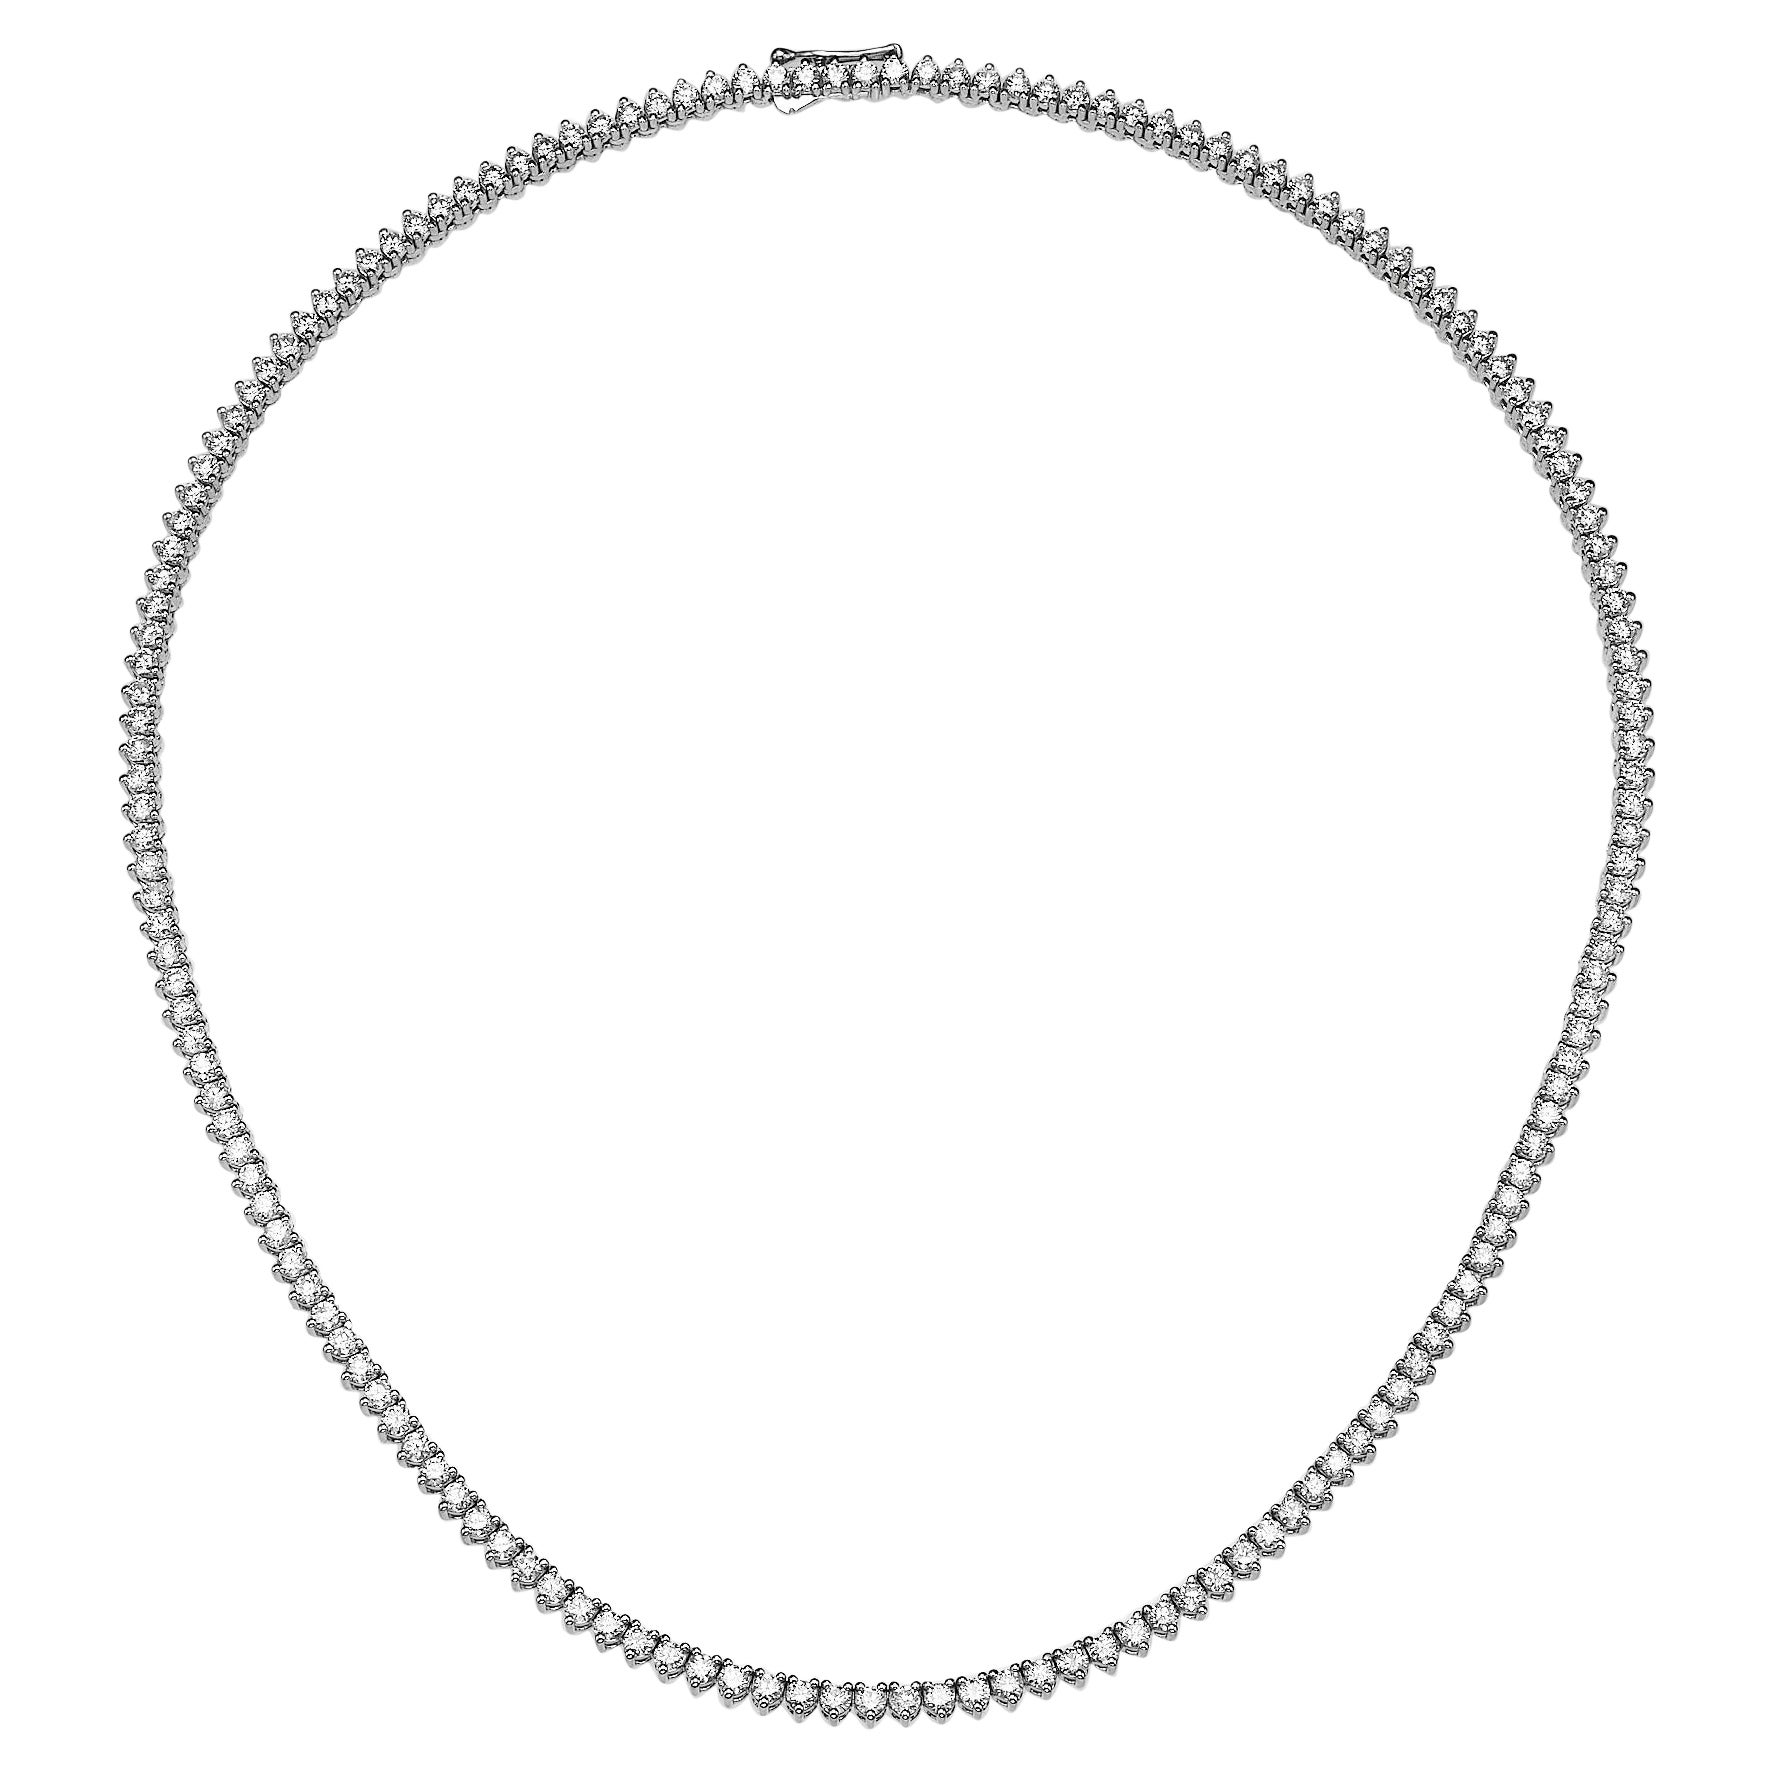 7.93 Carat Pave Set Round Cut Diamond Necklace For Sale